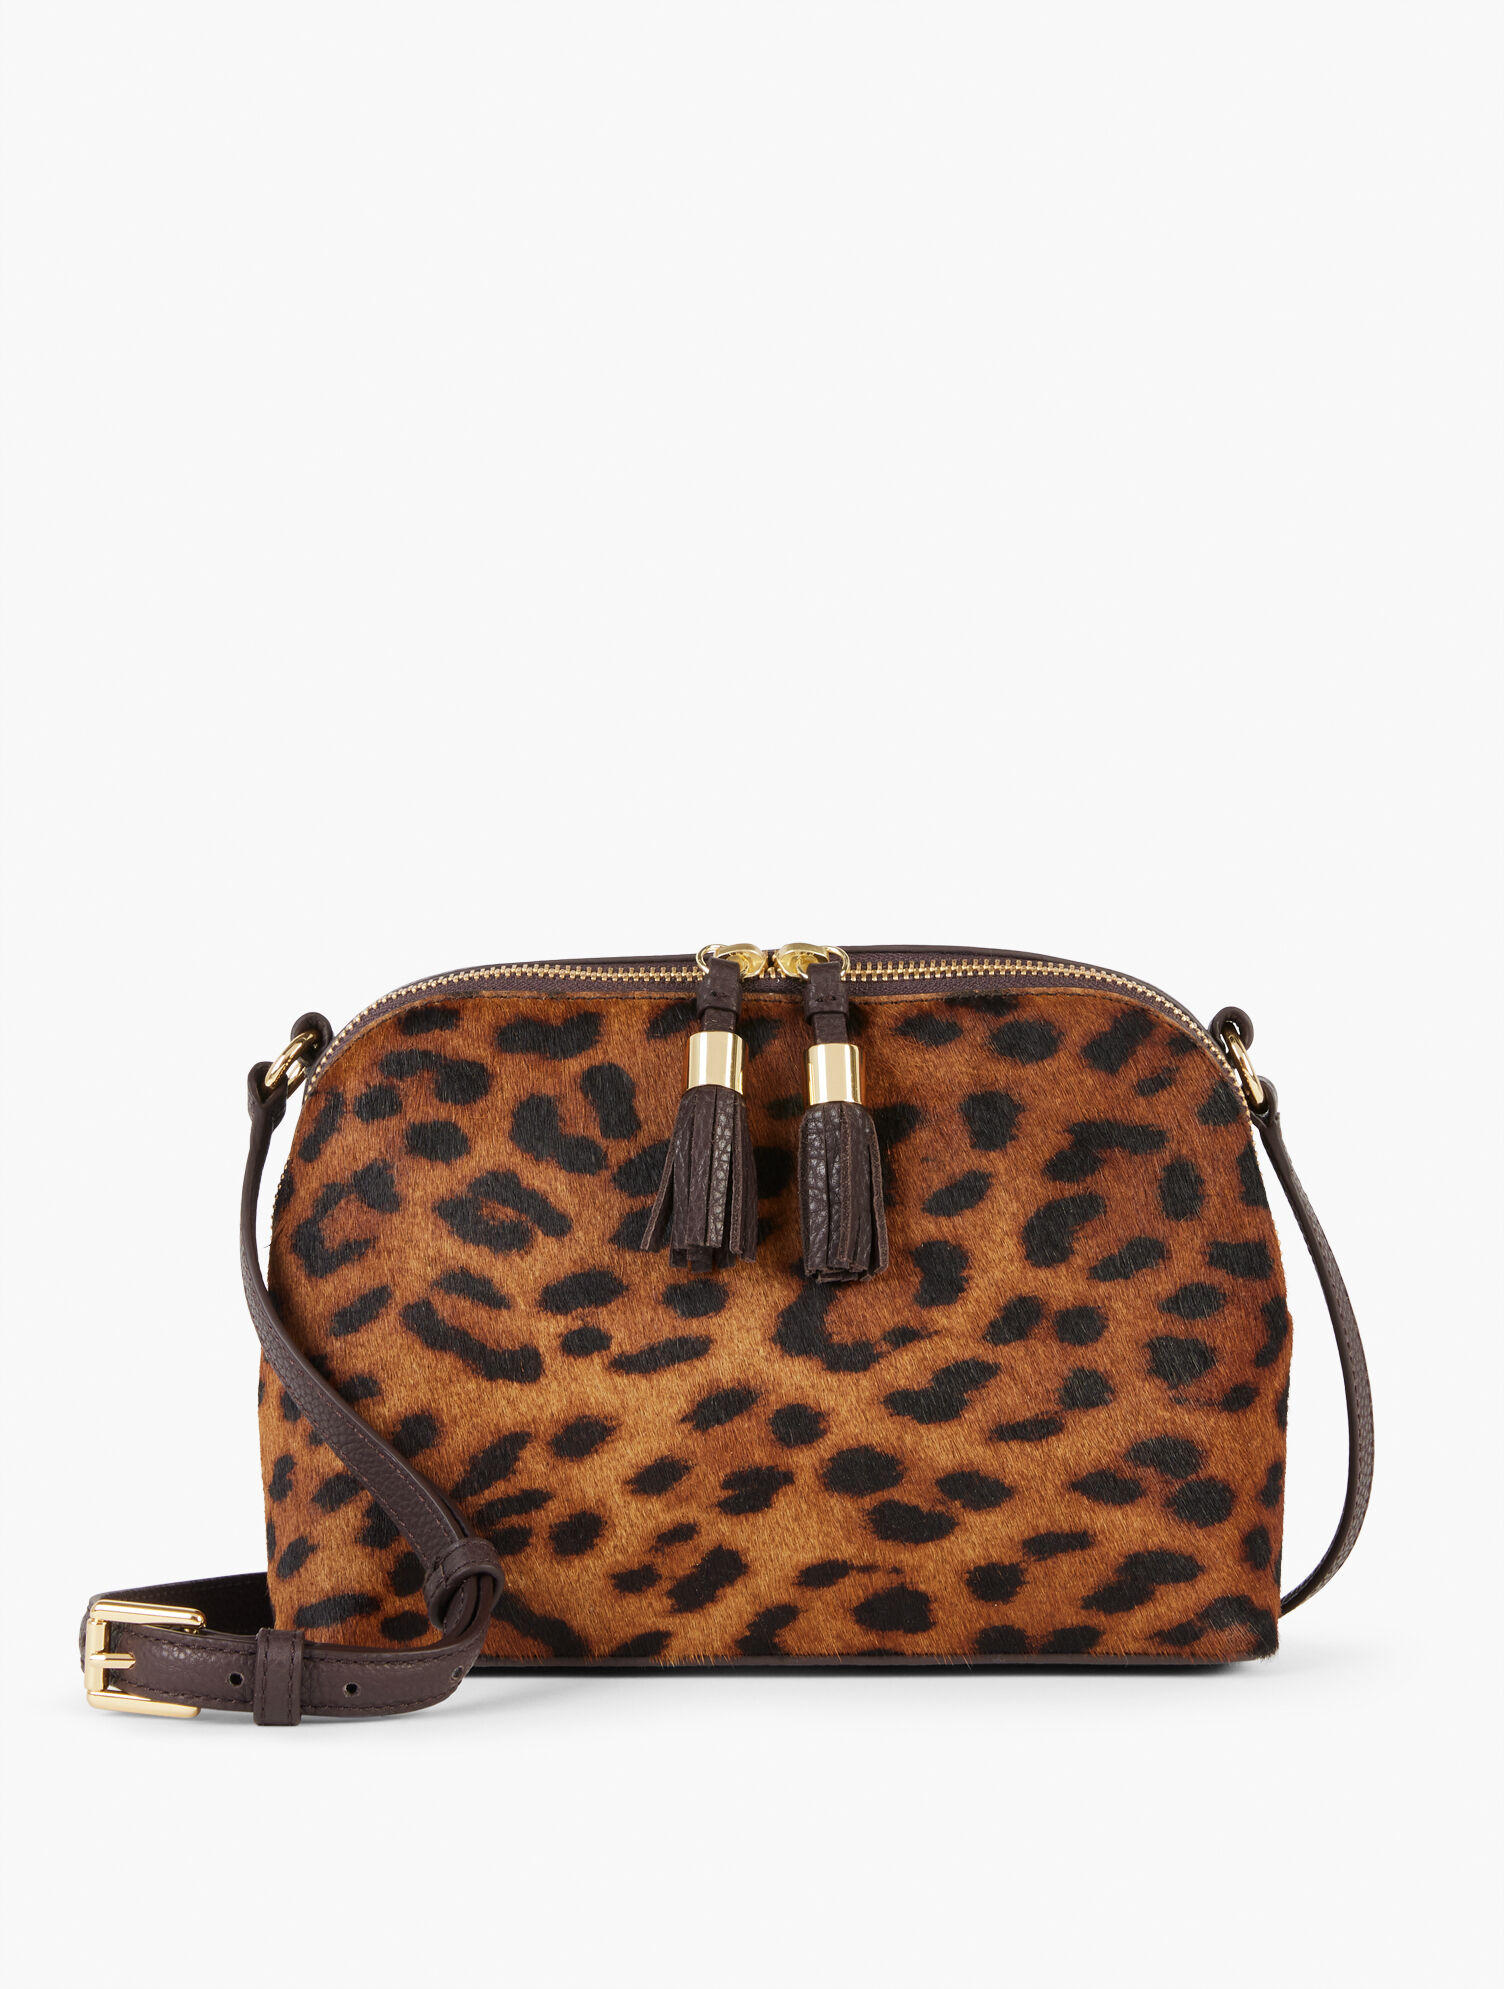 Crossbody Bag - Calf Hair Leopard - Medium Brown - 001 Talbots